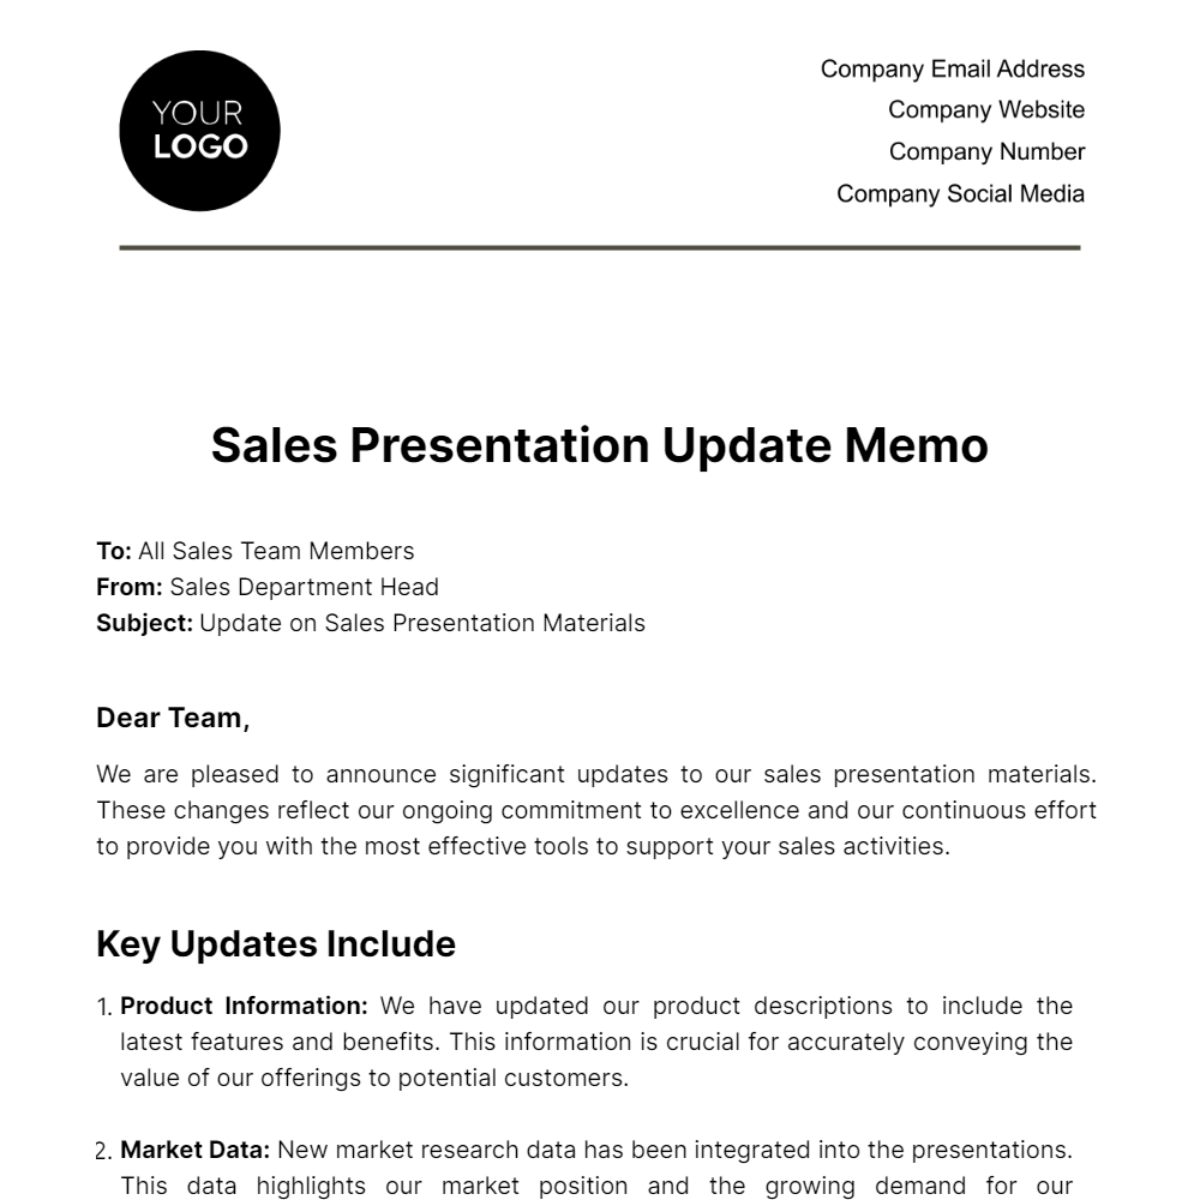 Free Sales Presentation Update Memo Template